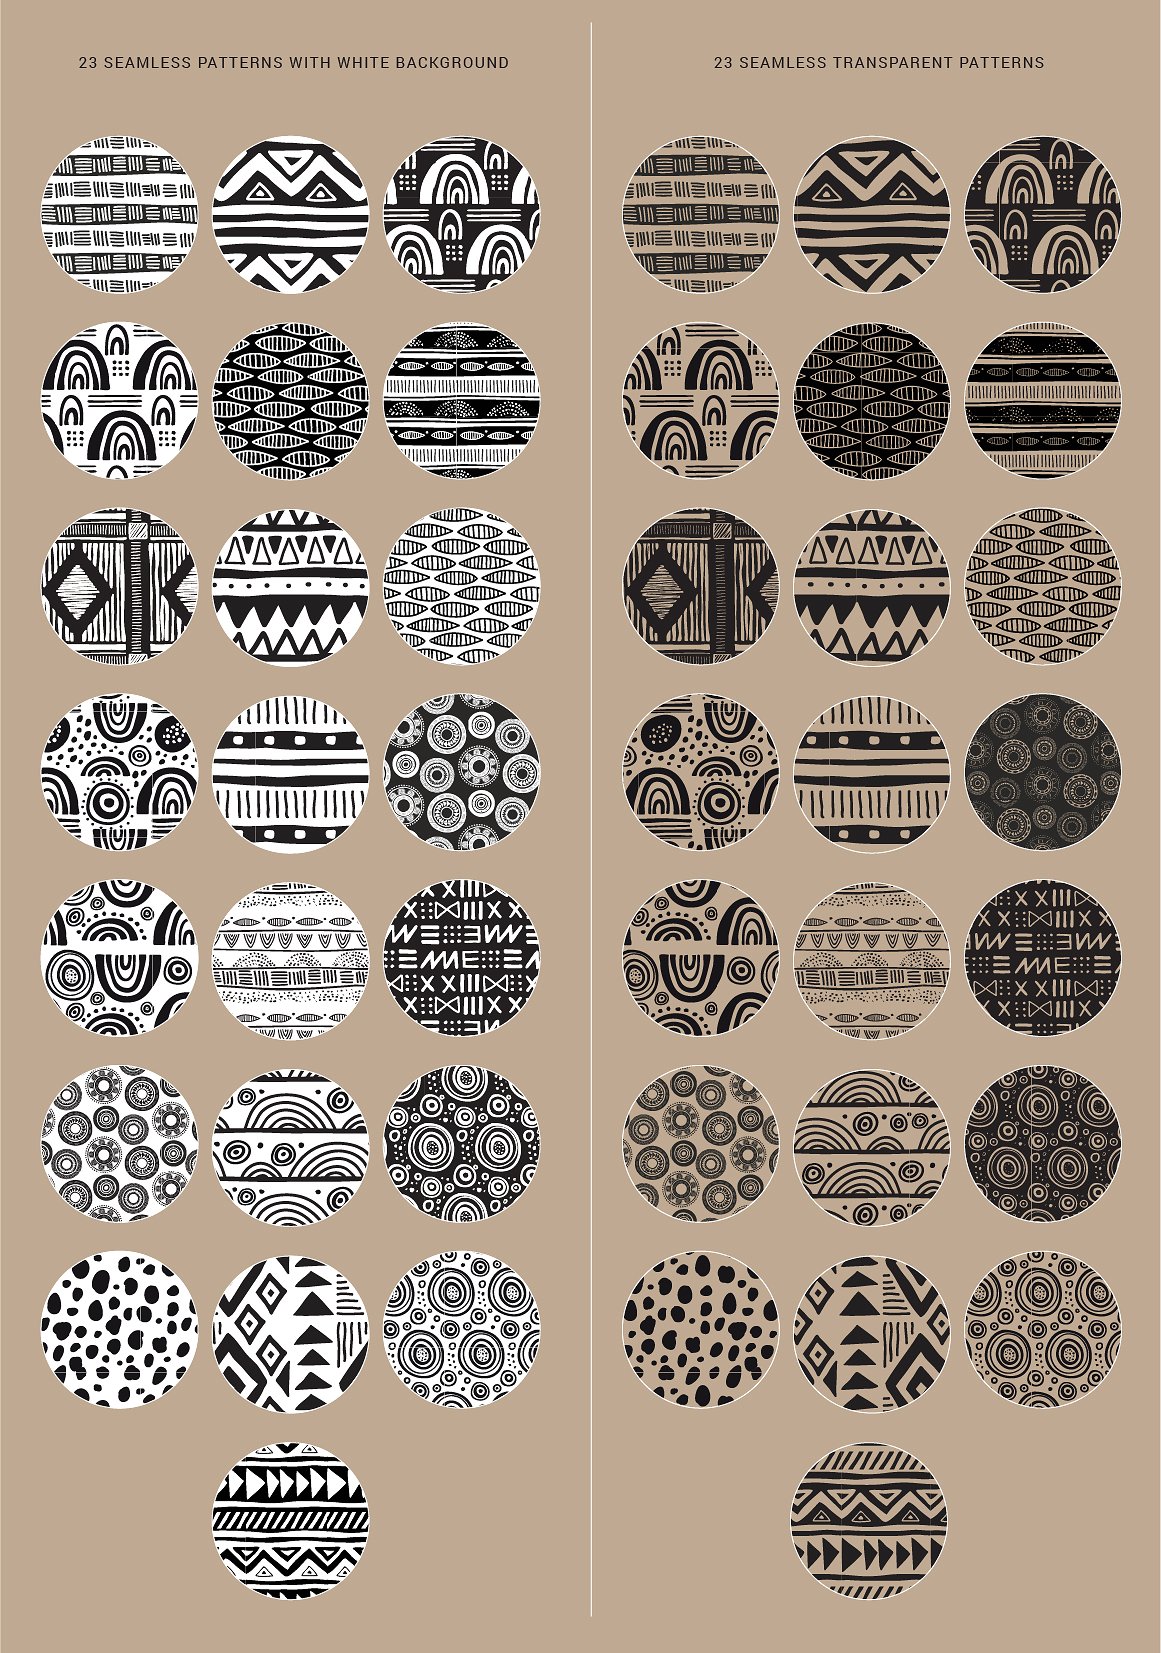 非洲元素图案笔刷 African dream – patterns and brushes插图6